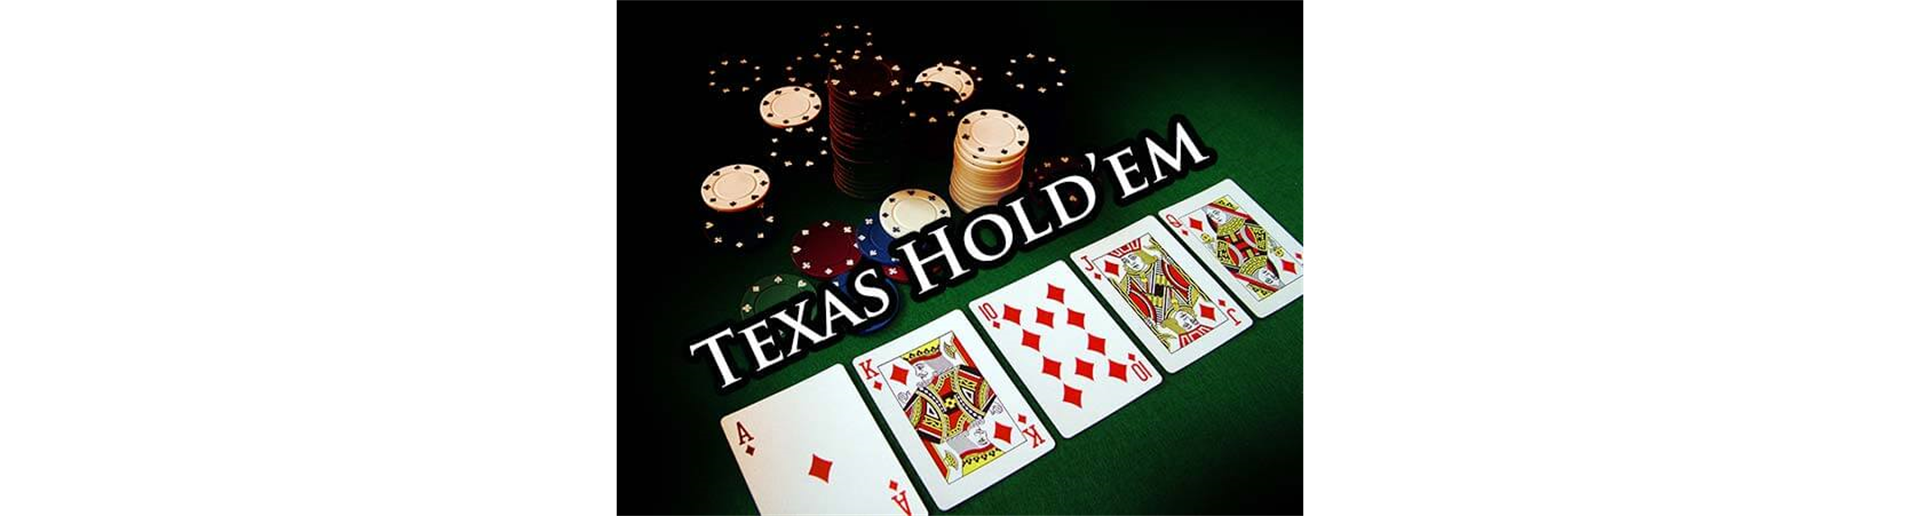 Texas Hold'em Fundraiser March 9